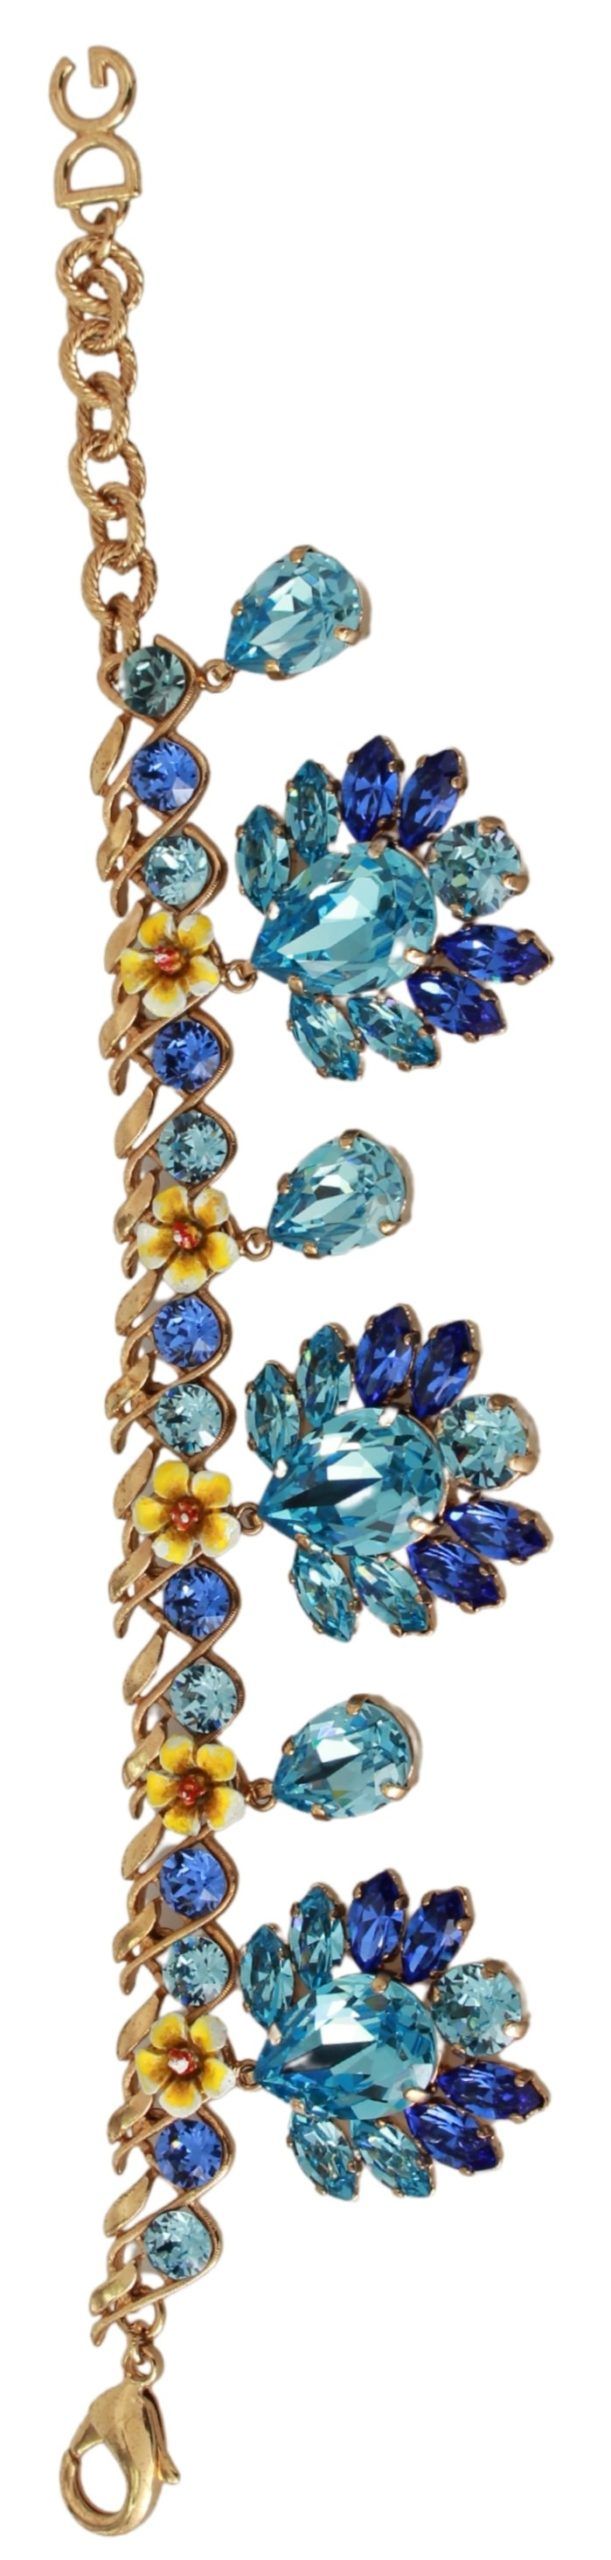 Elegant Gold Chain Charm Bracelet